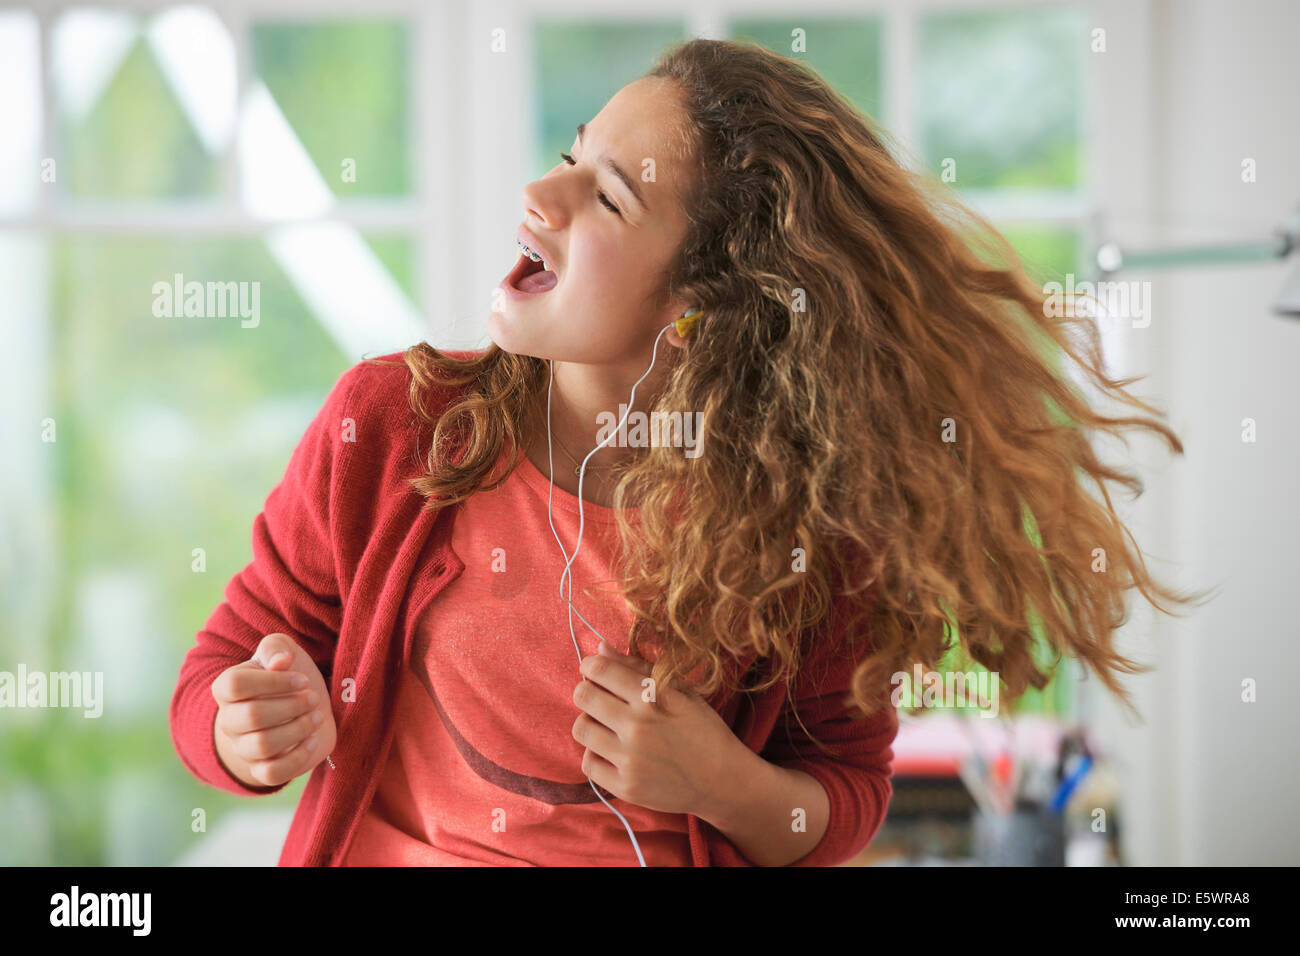 Young girl wearing headphones, dancing to music Stock Photo